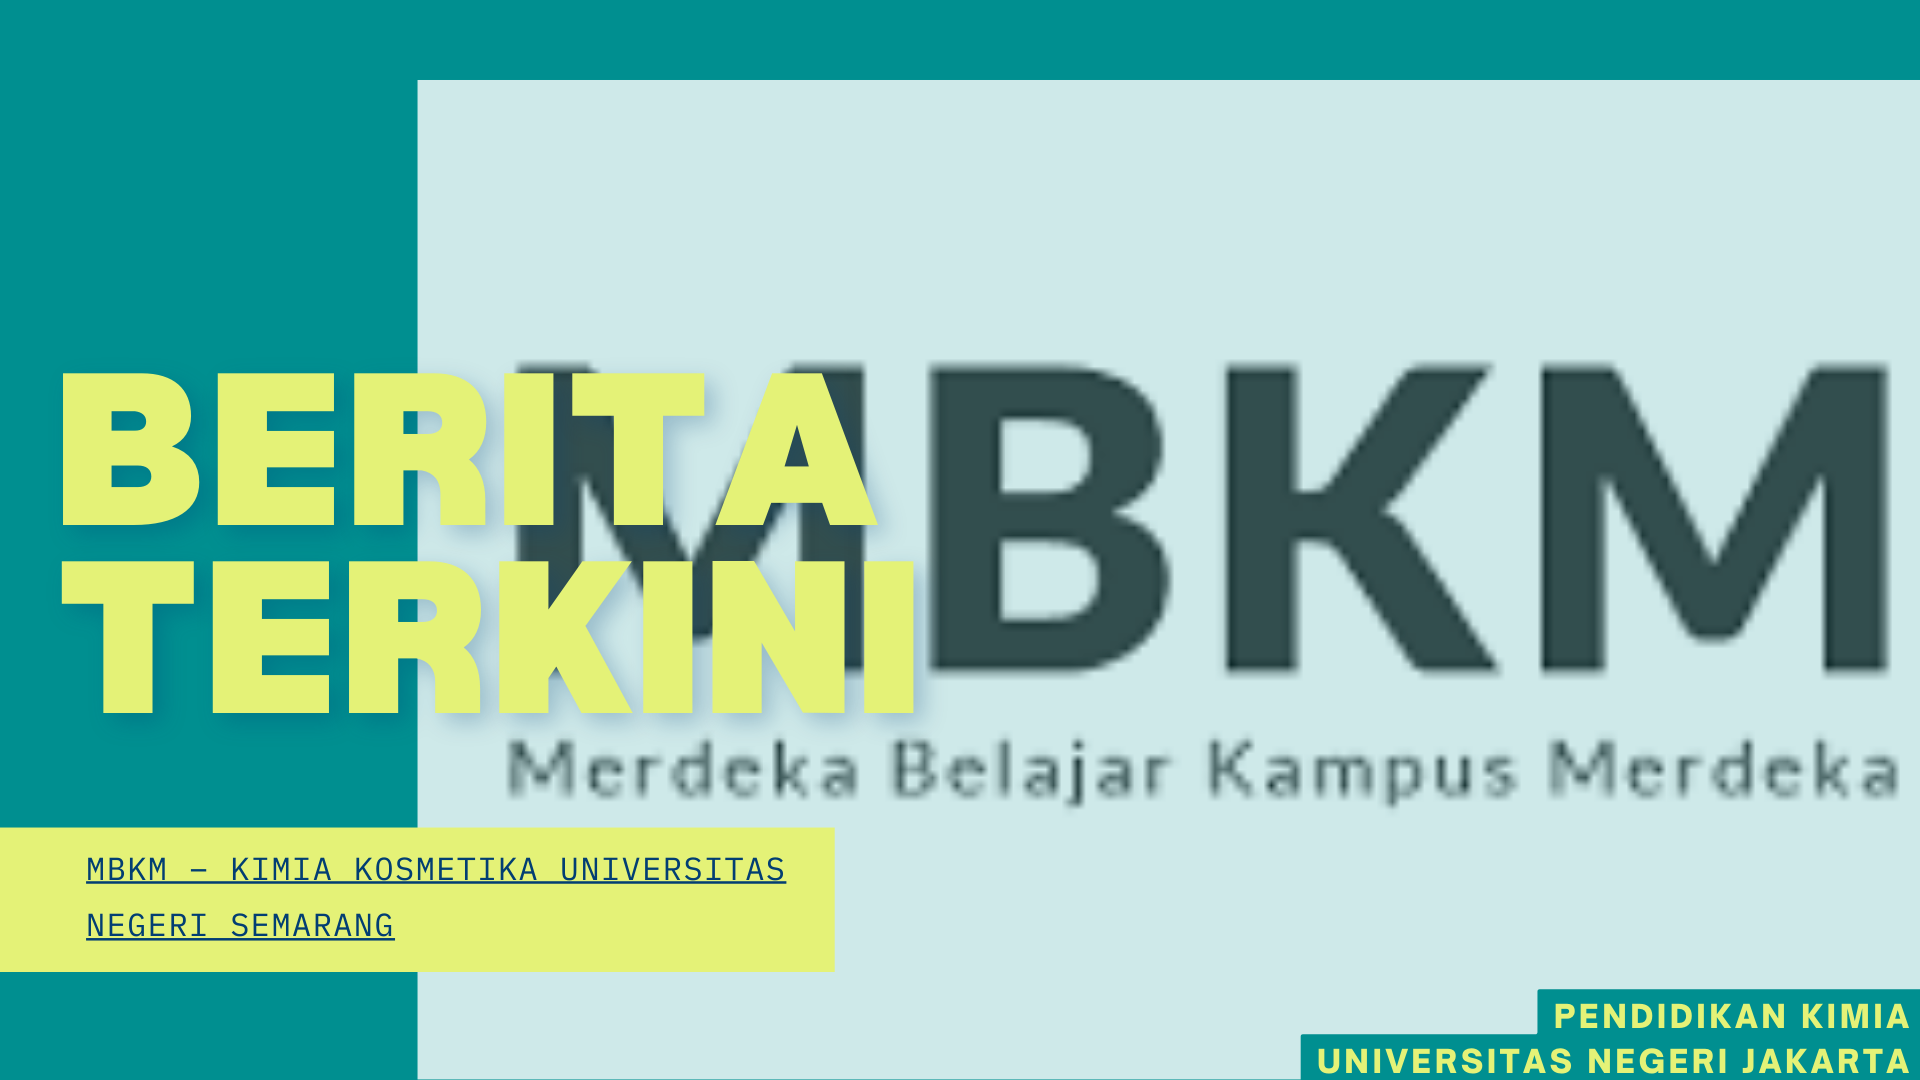 MBKM – Kimia Kosmetika Universitas Negeri Semarang